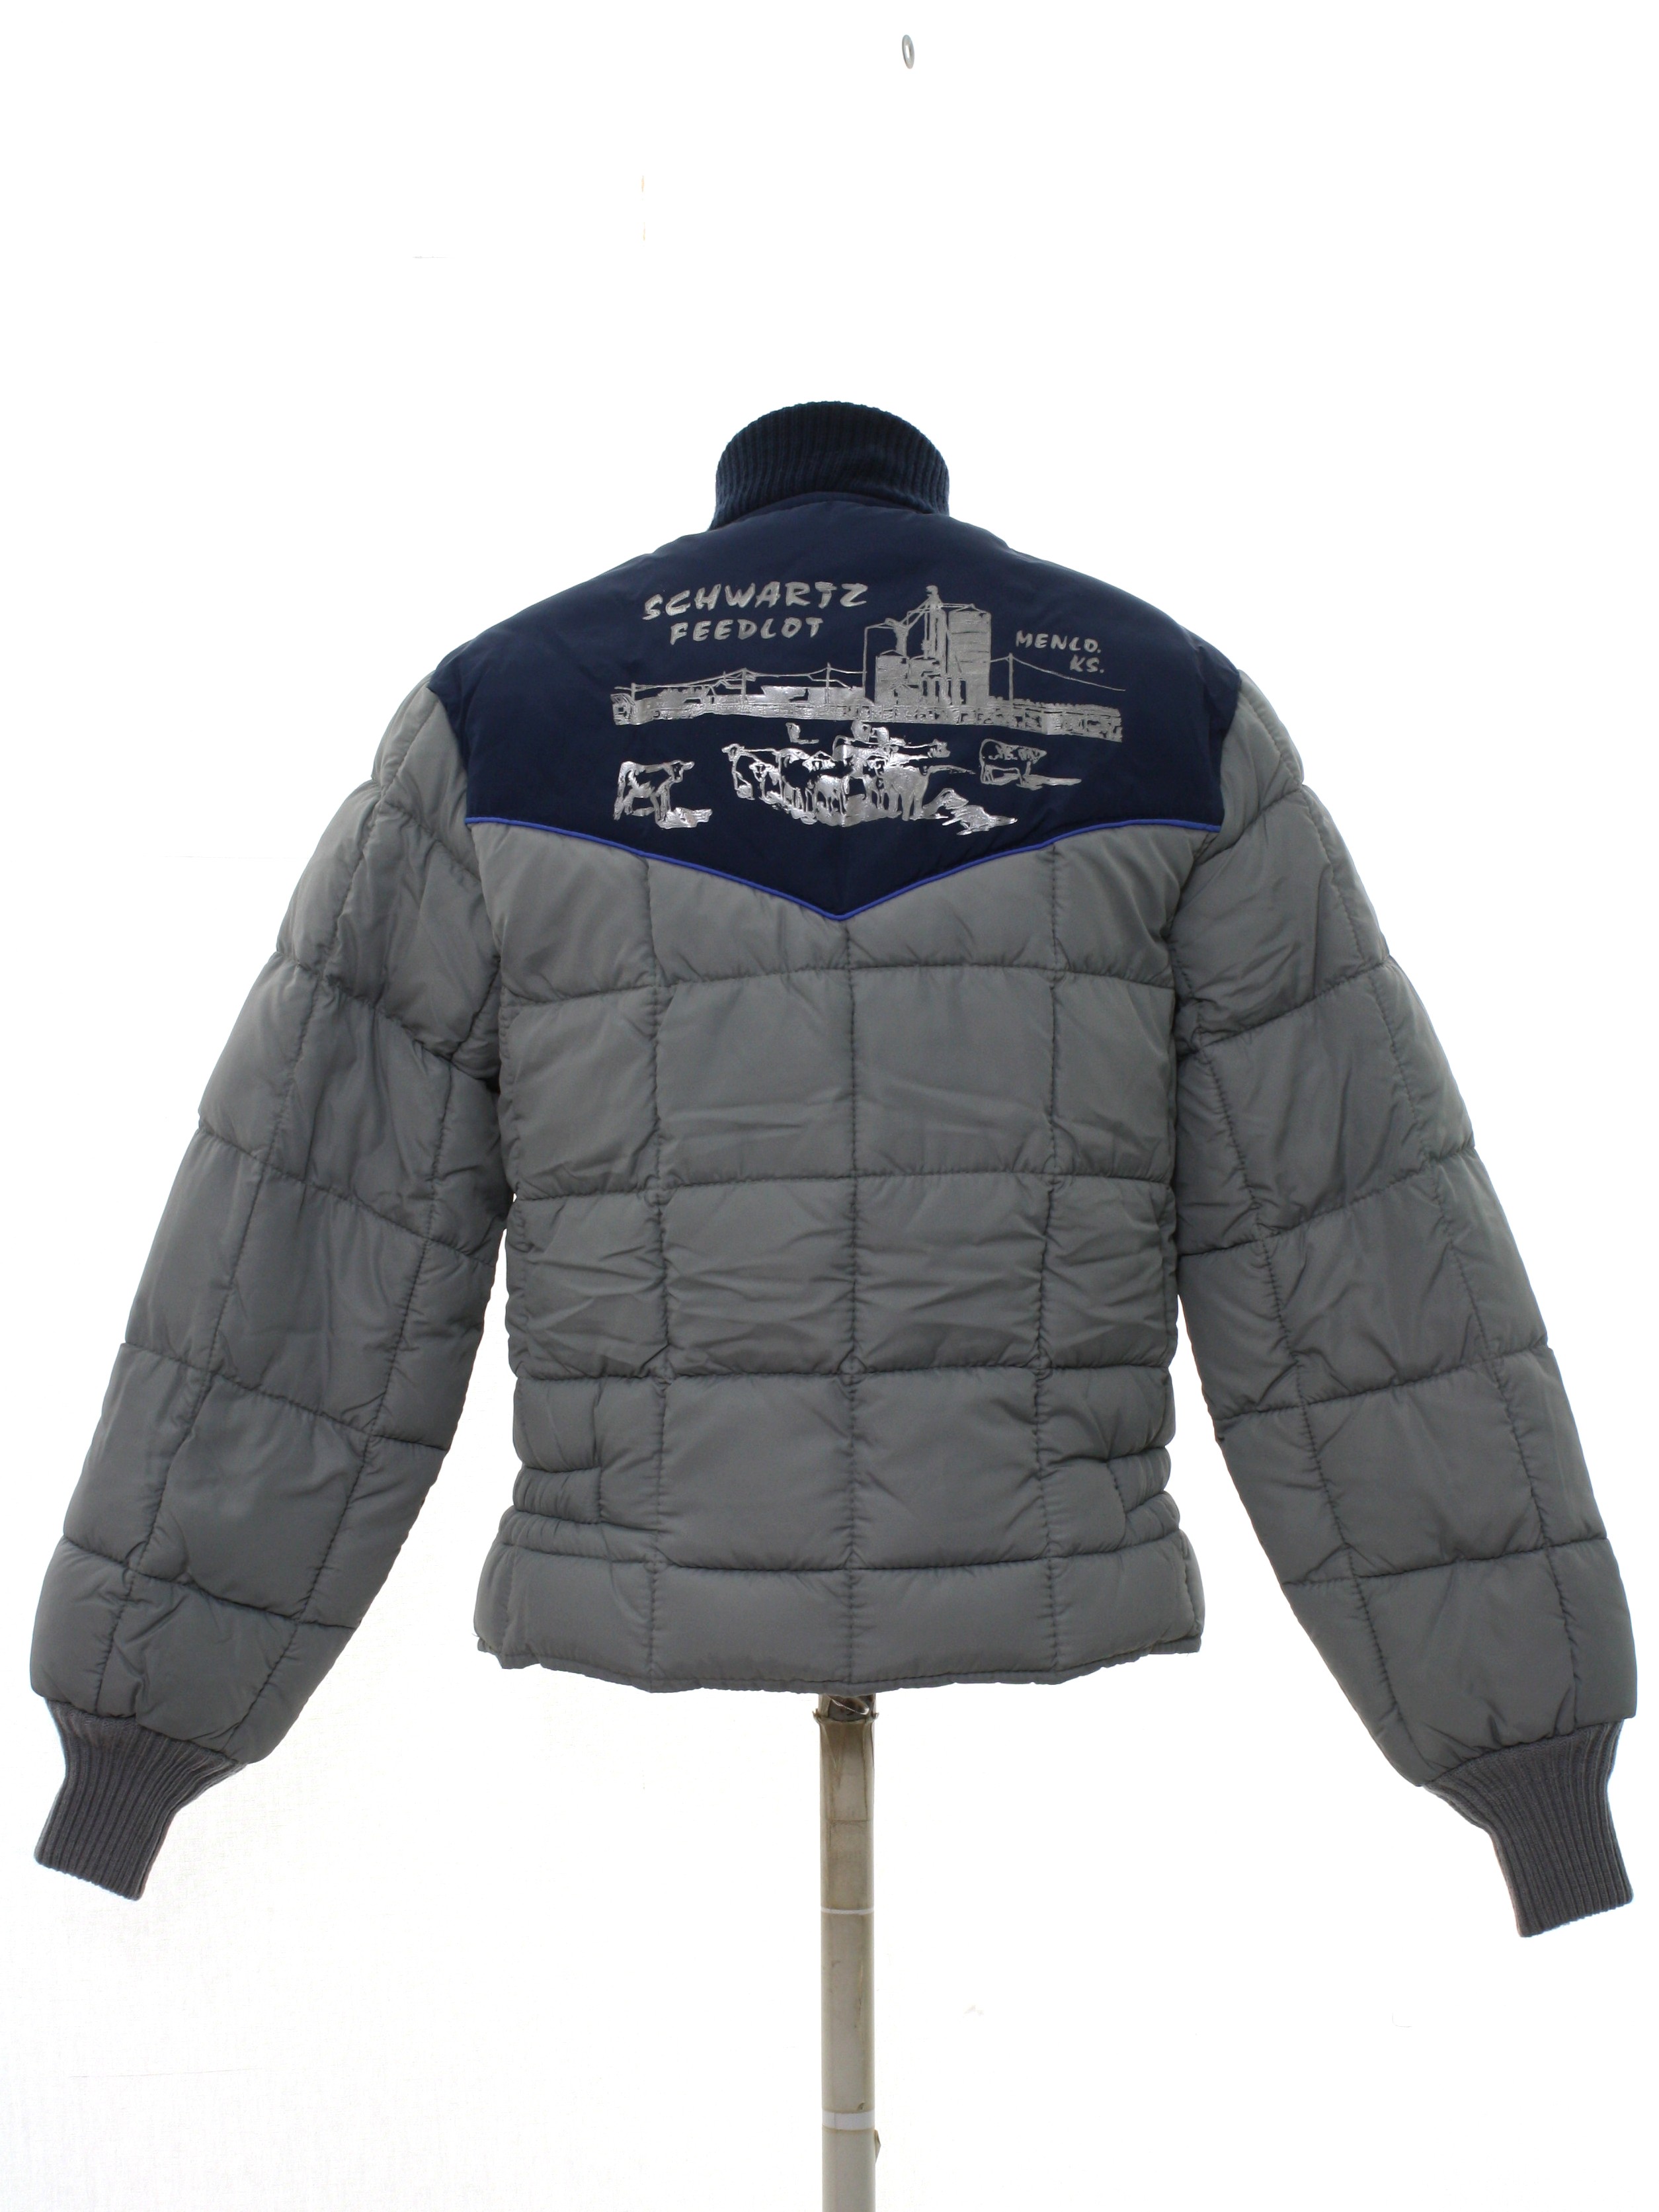 Walls Blizzard 80's Ski Jacket